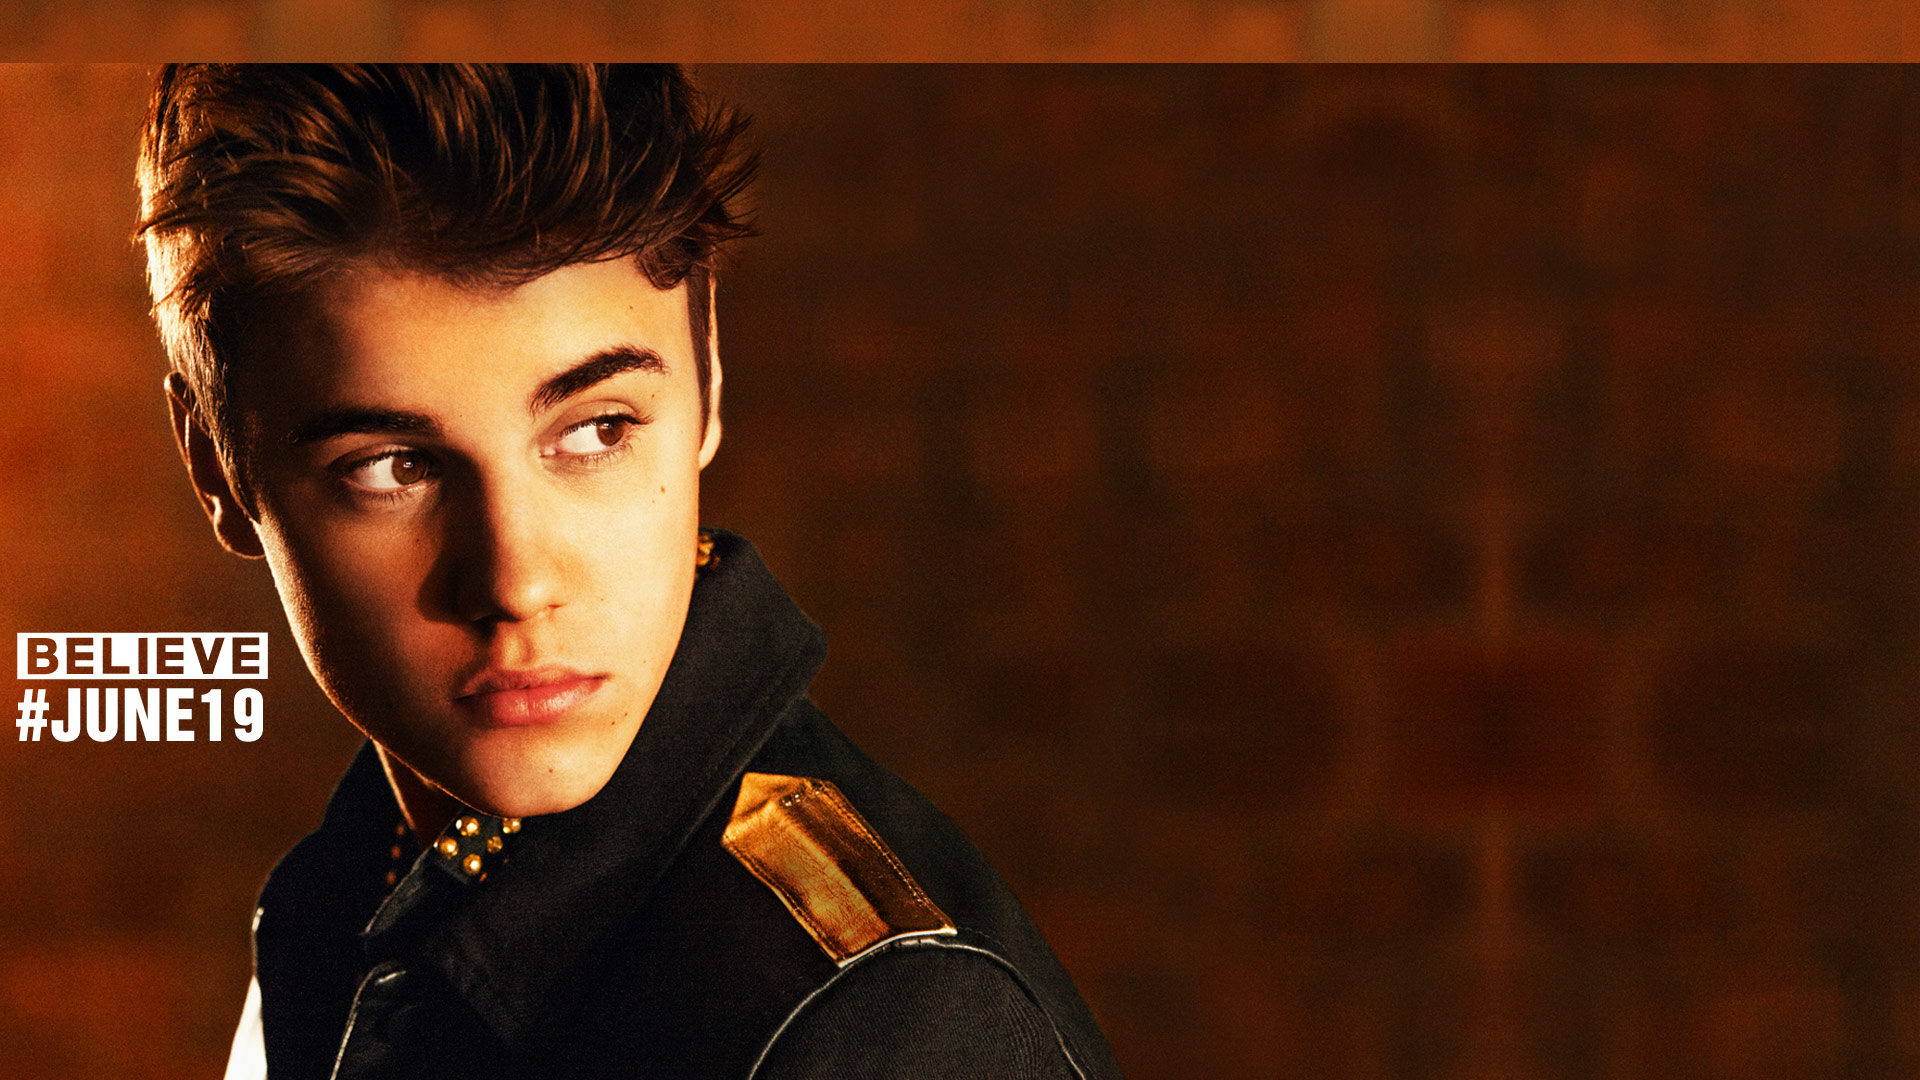 32+] Justin Bieber Believe Wallpapers - WallpaperSafari